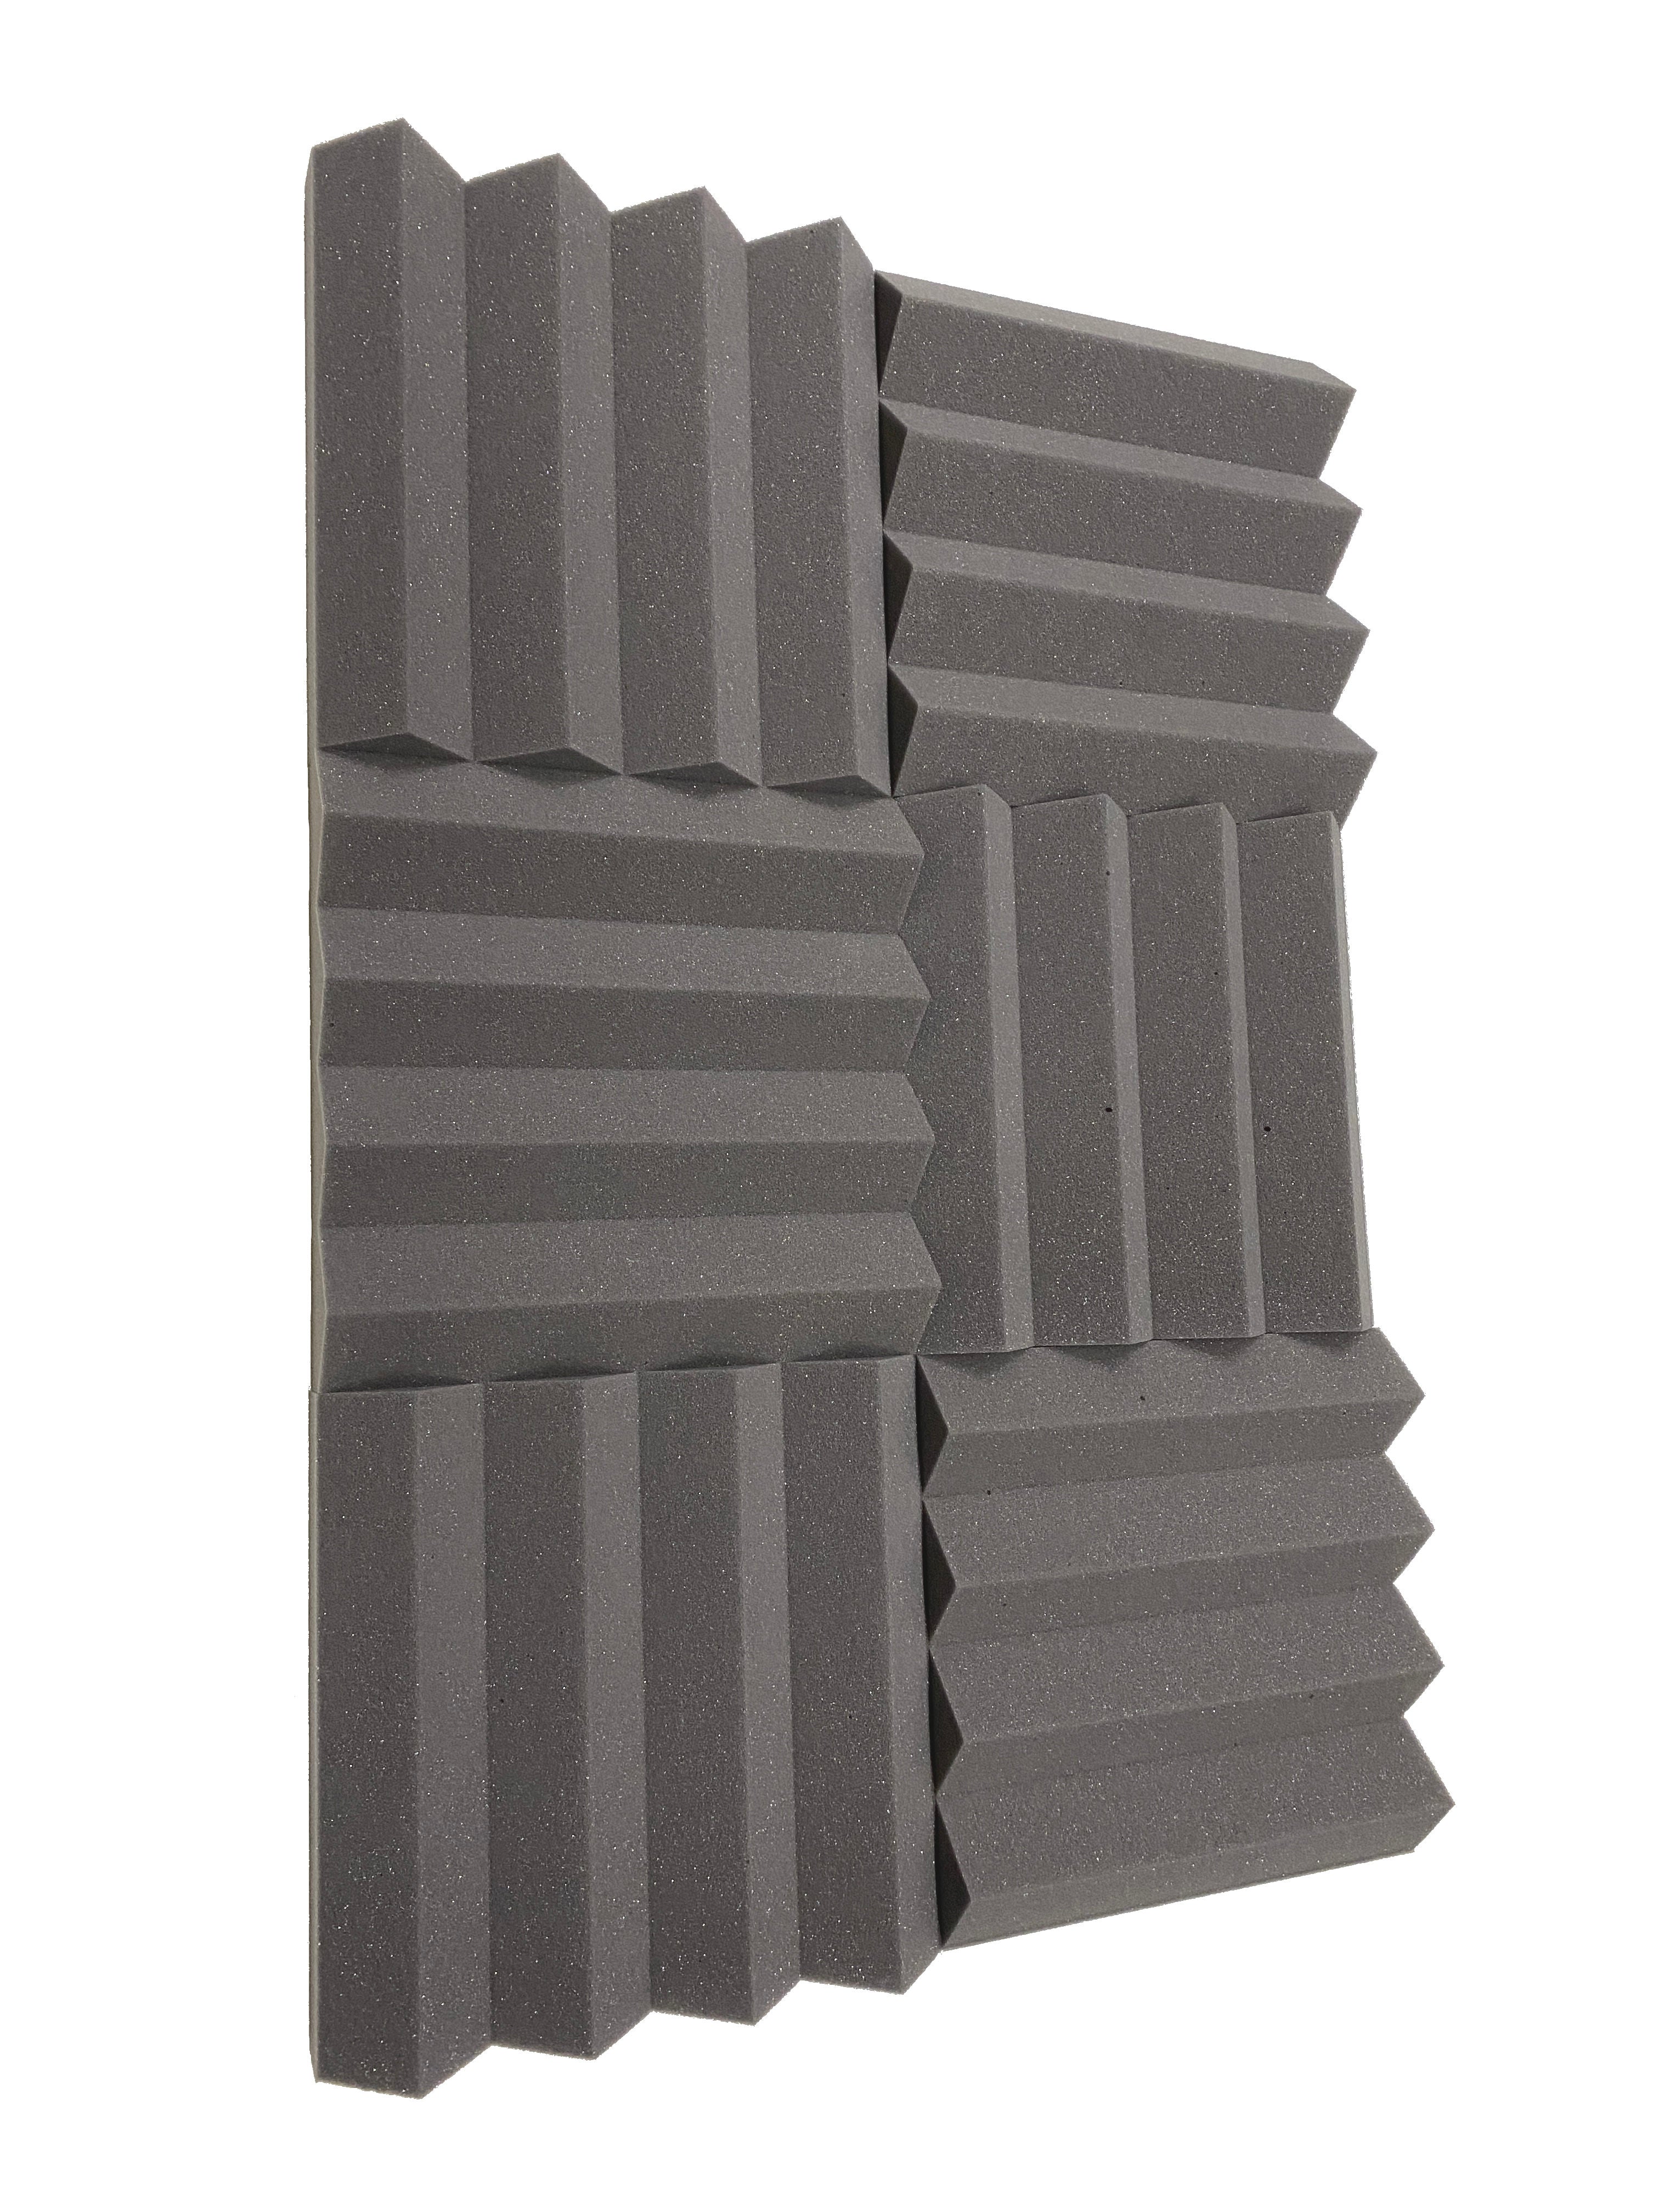 Wedge PRO 12" Acoustic Studio Foam Tile Pack